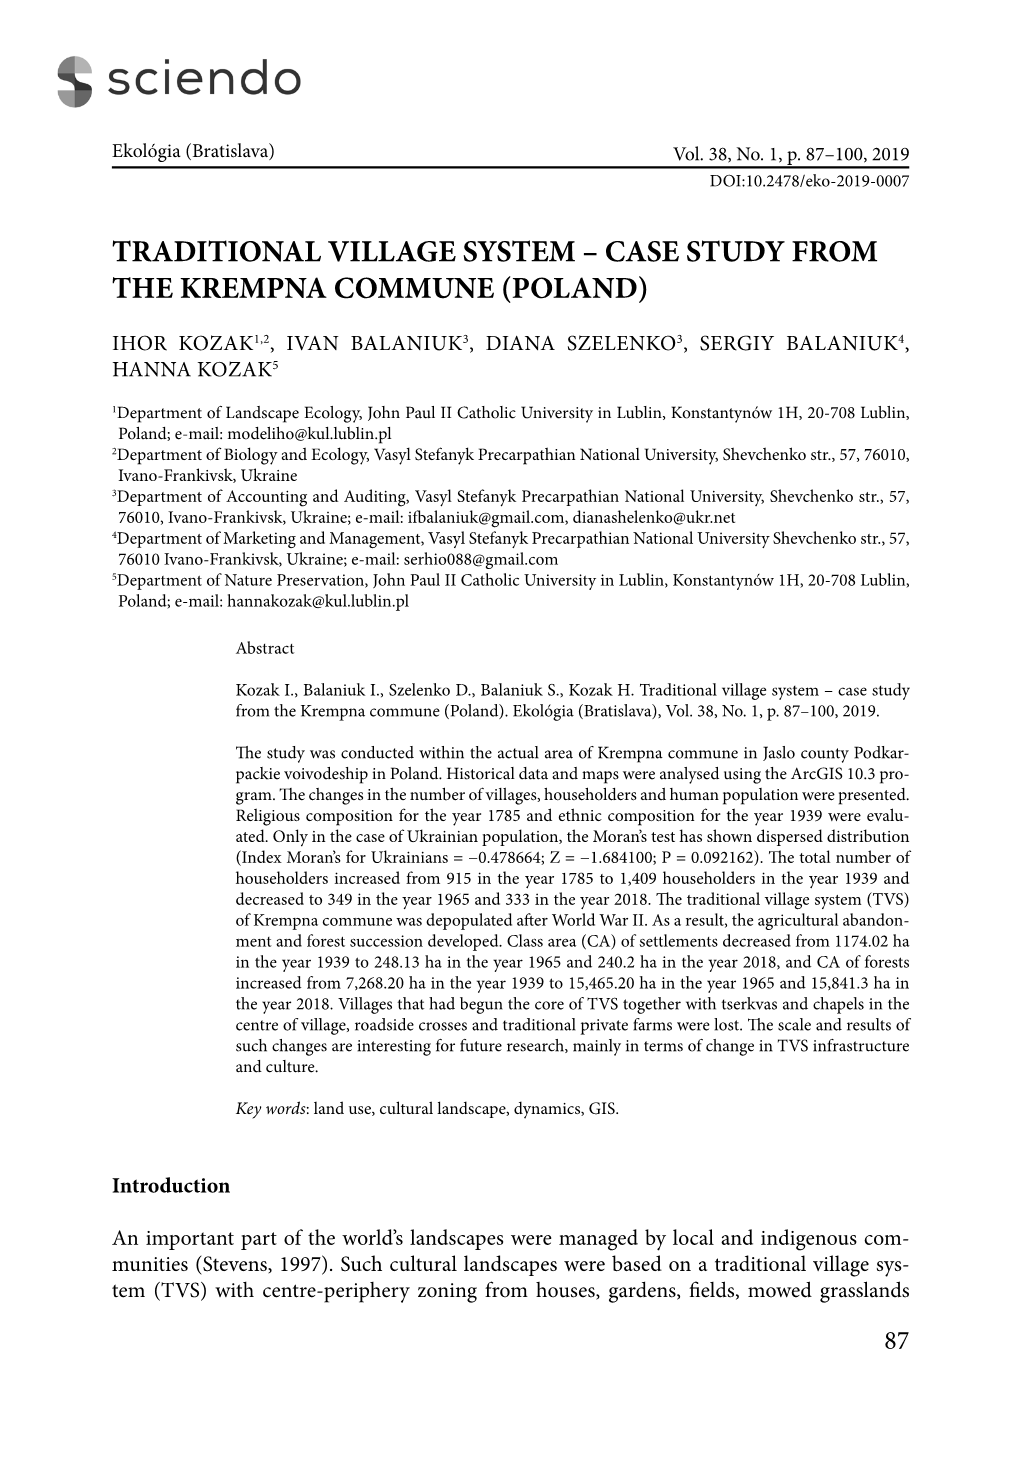 Traditional Village System – Case Study from the Krempna Commune (Poland)